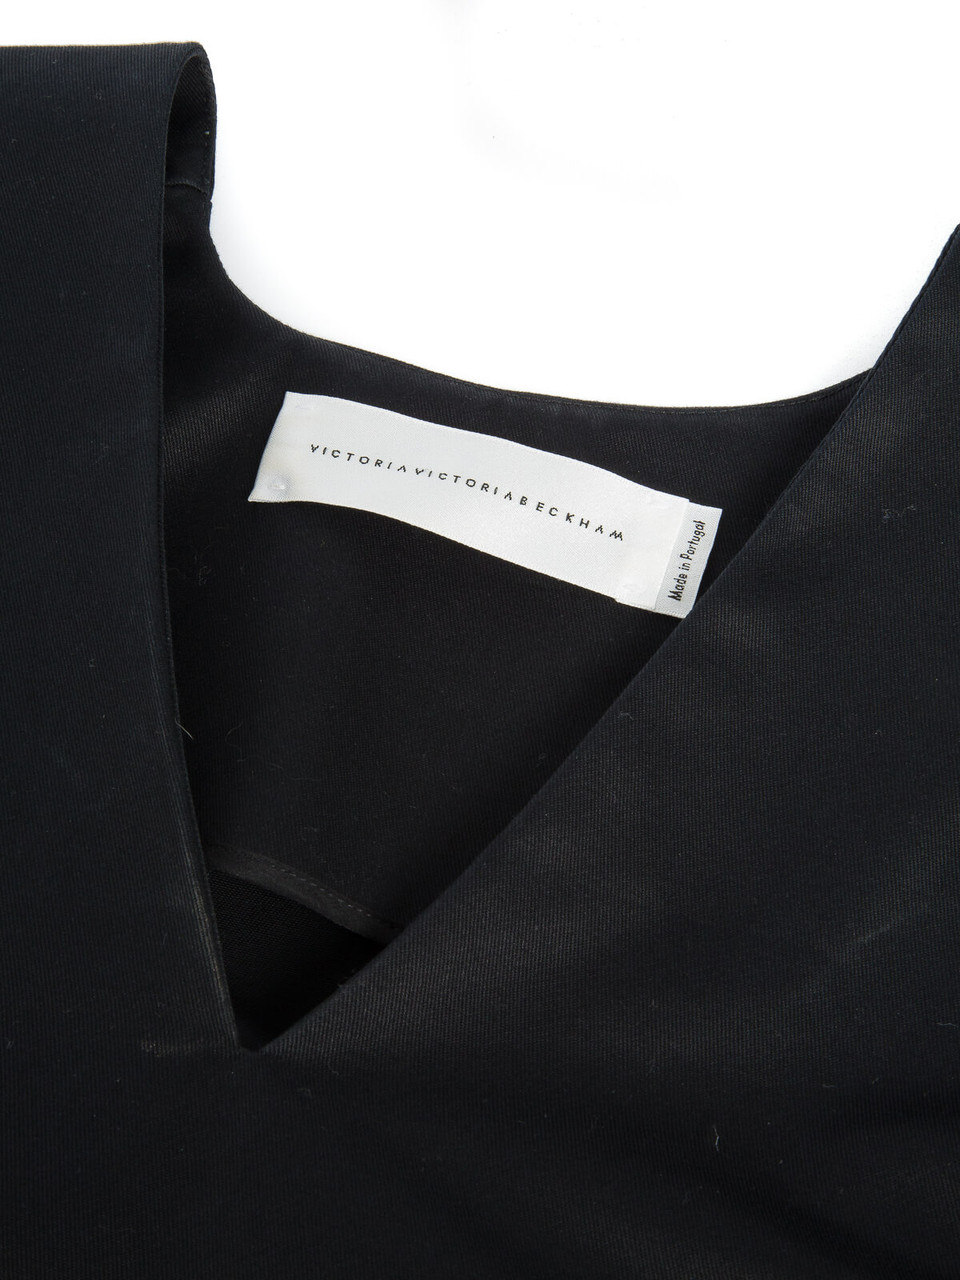 Victoria Beckham Women's Ruffle Sleeve Top, Size 12 UK, Black Cotton